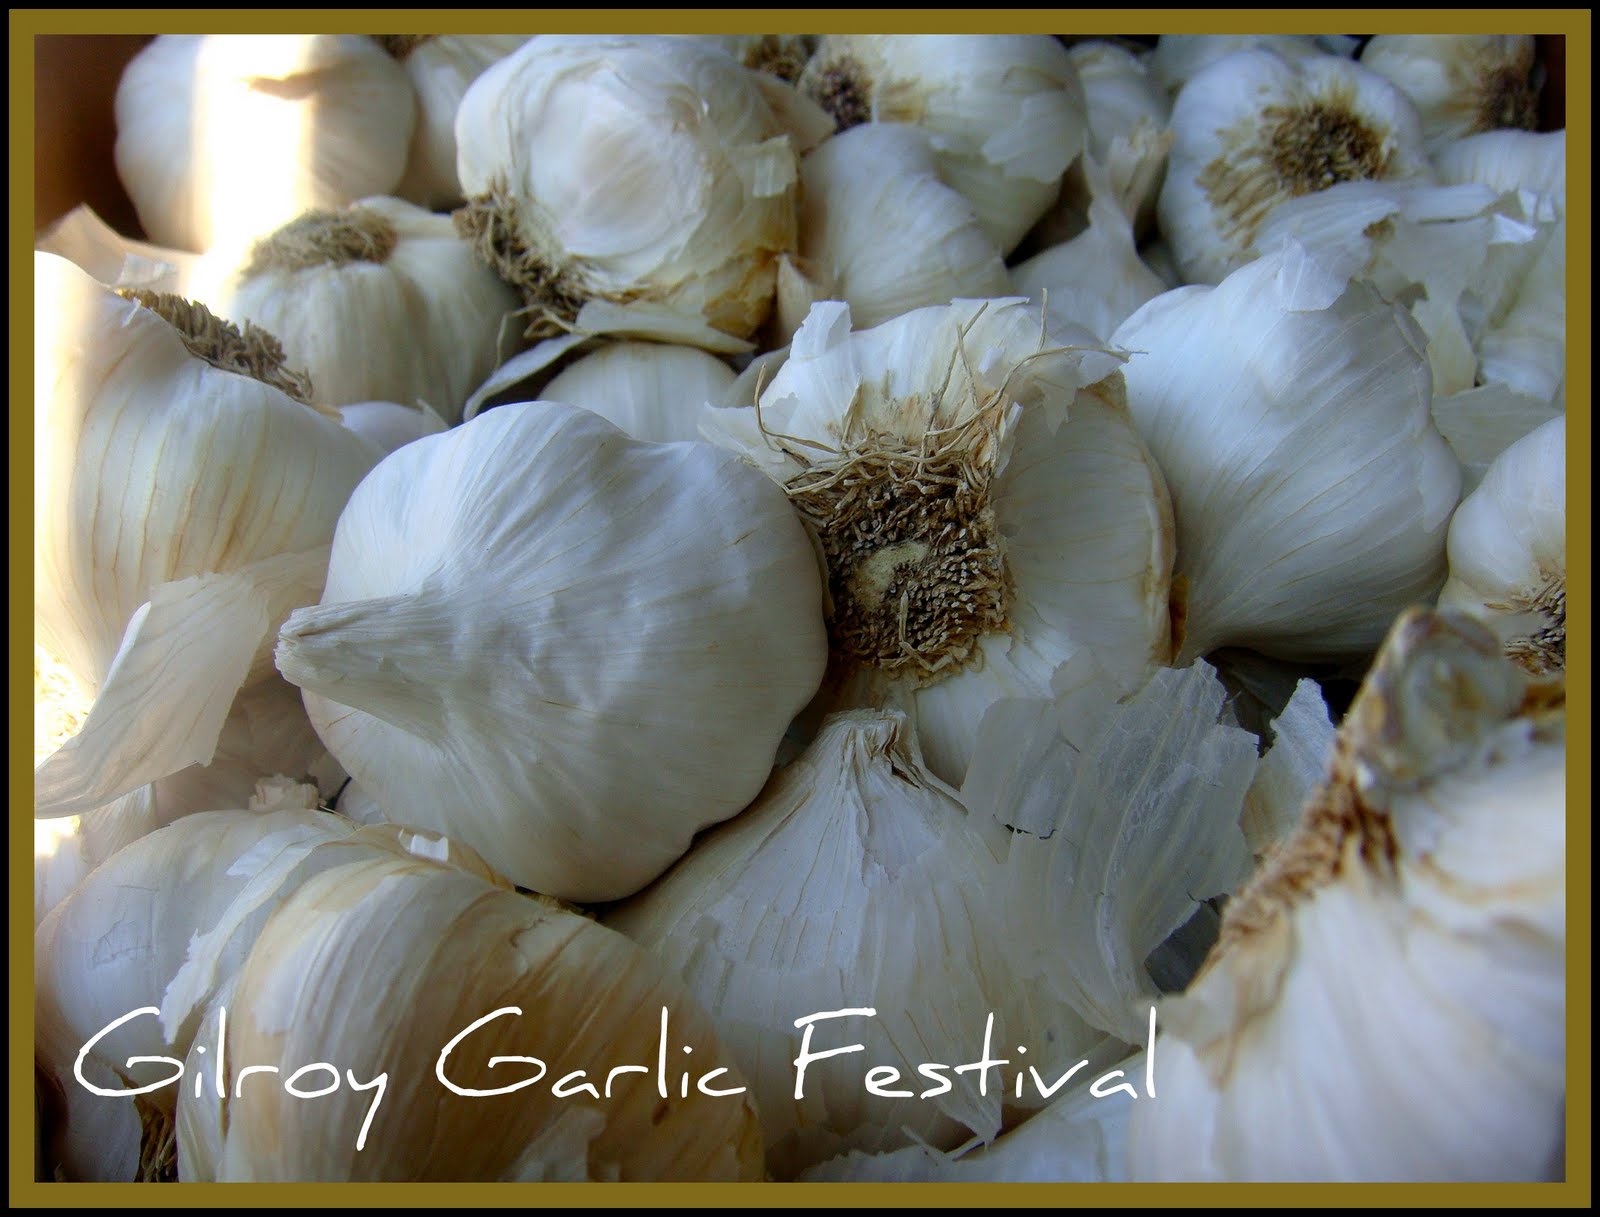 Garlic Festival in Gilroy sealaura